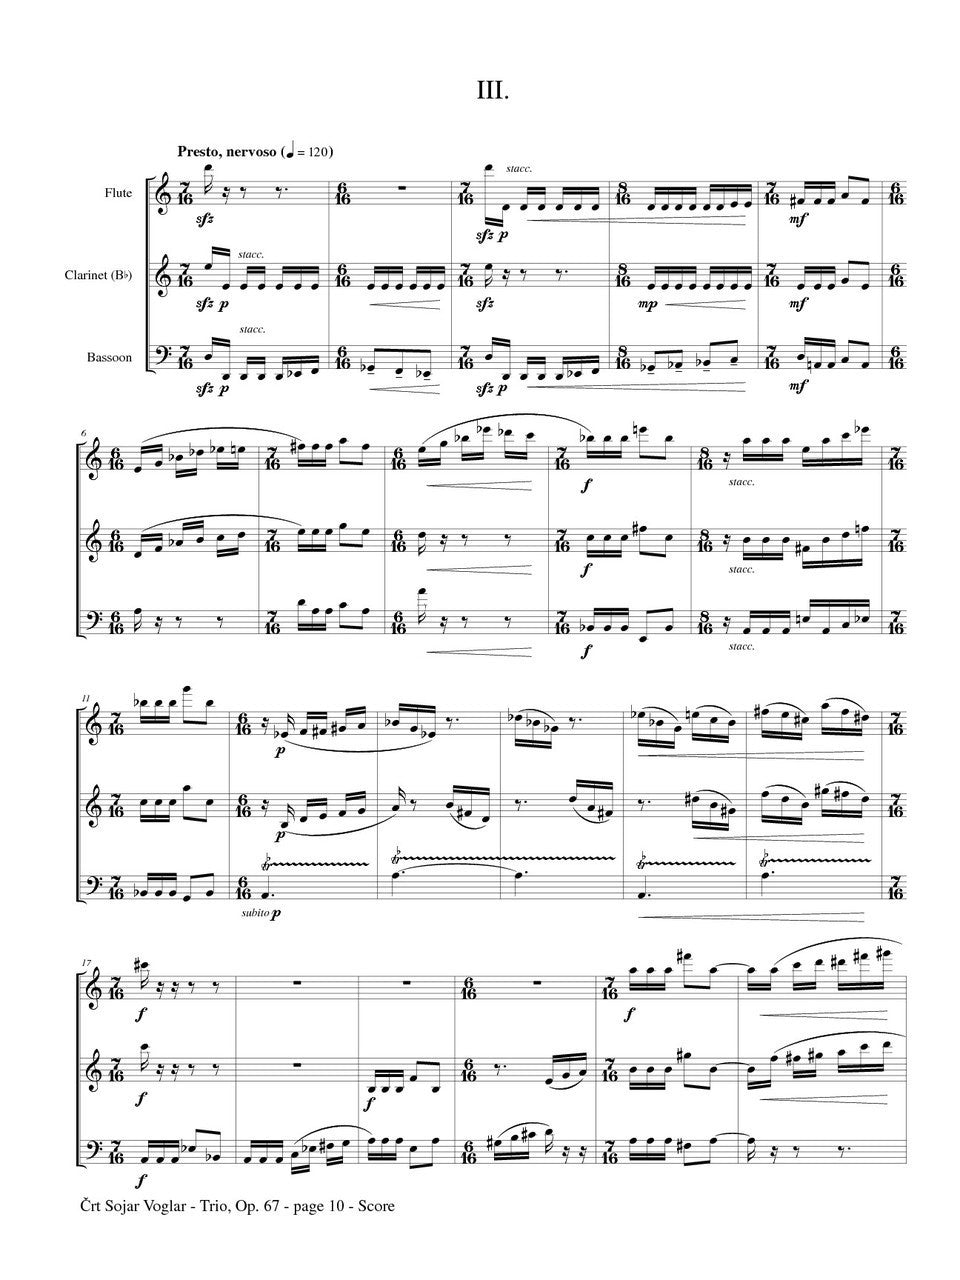 Voglar - Trio Flute, Clarinet, and Bassoon, Op. 67